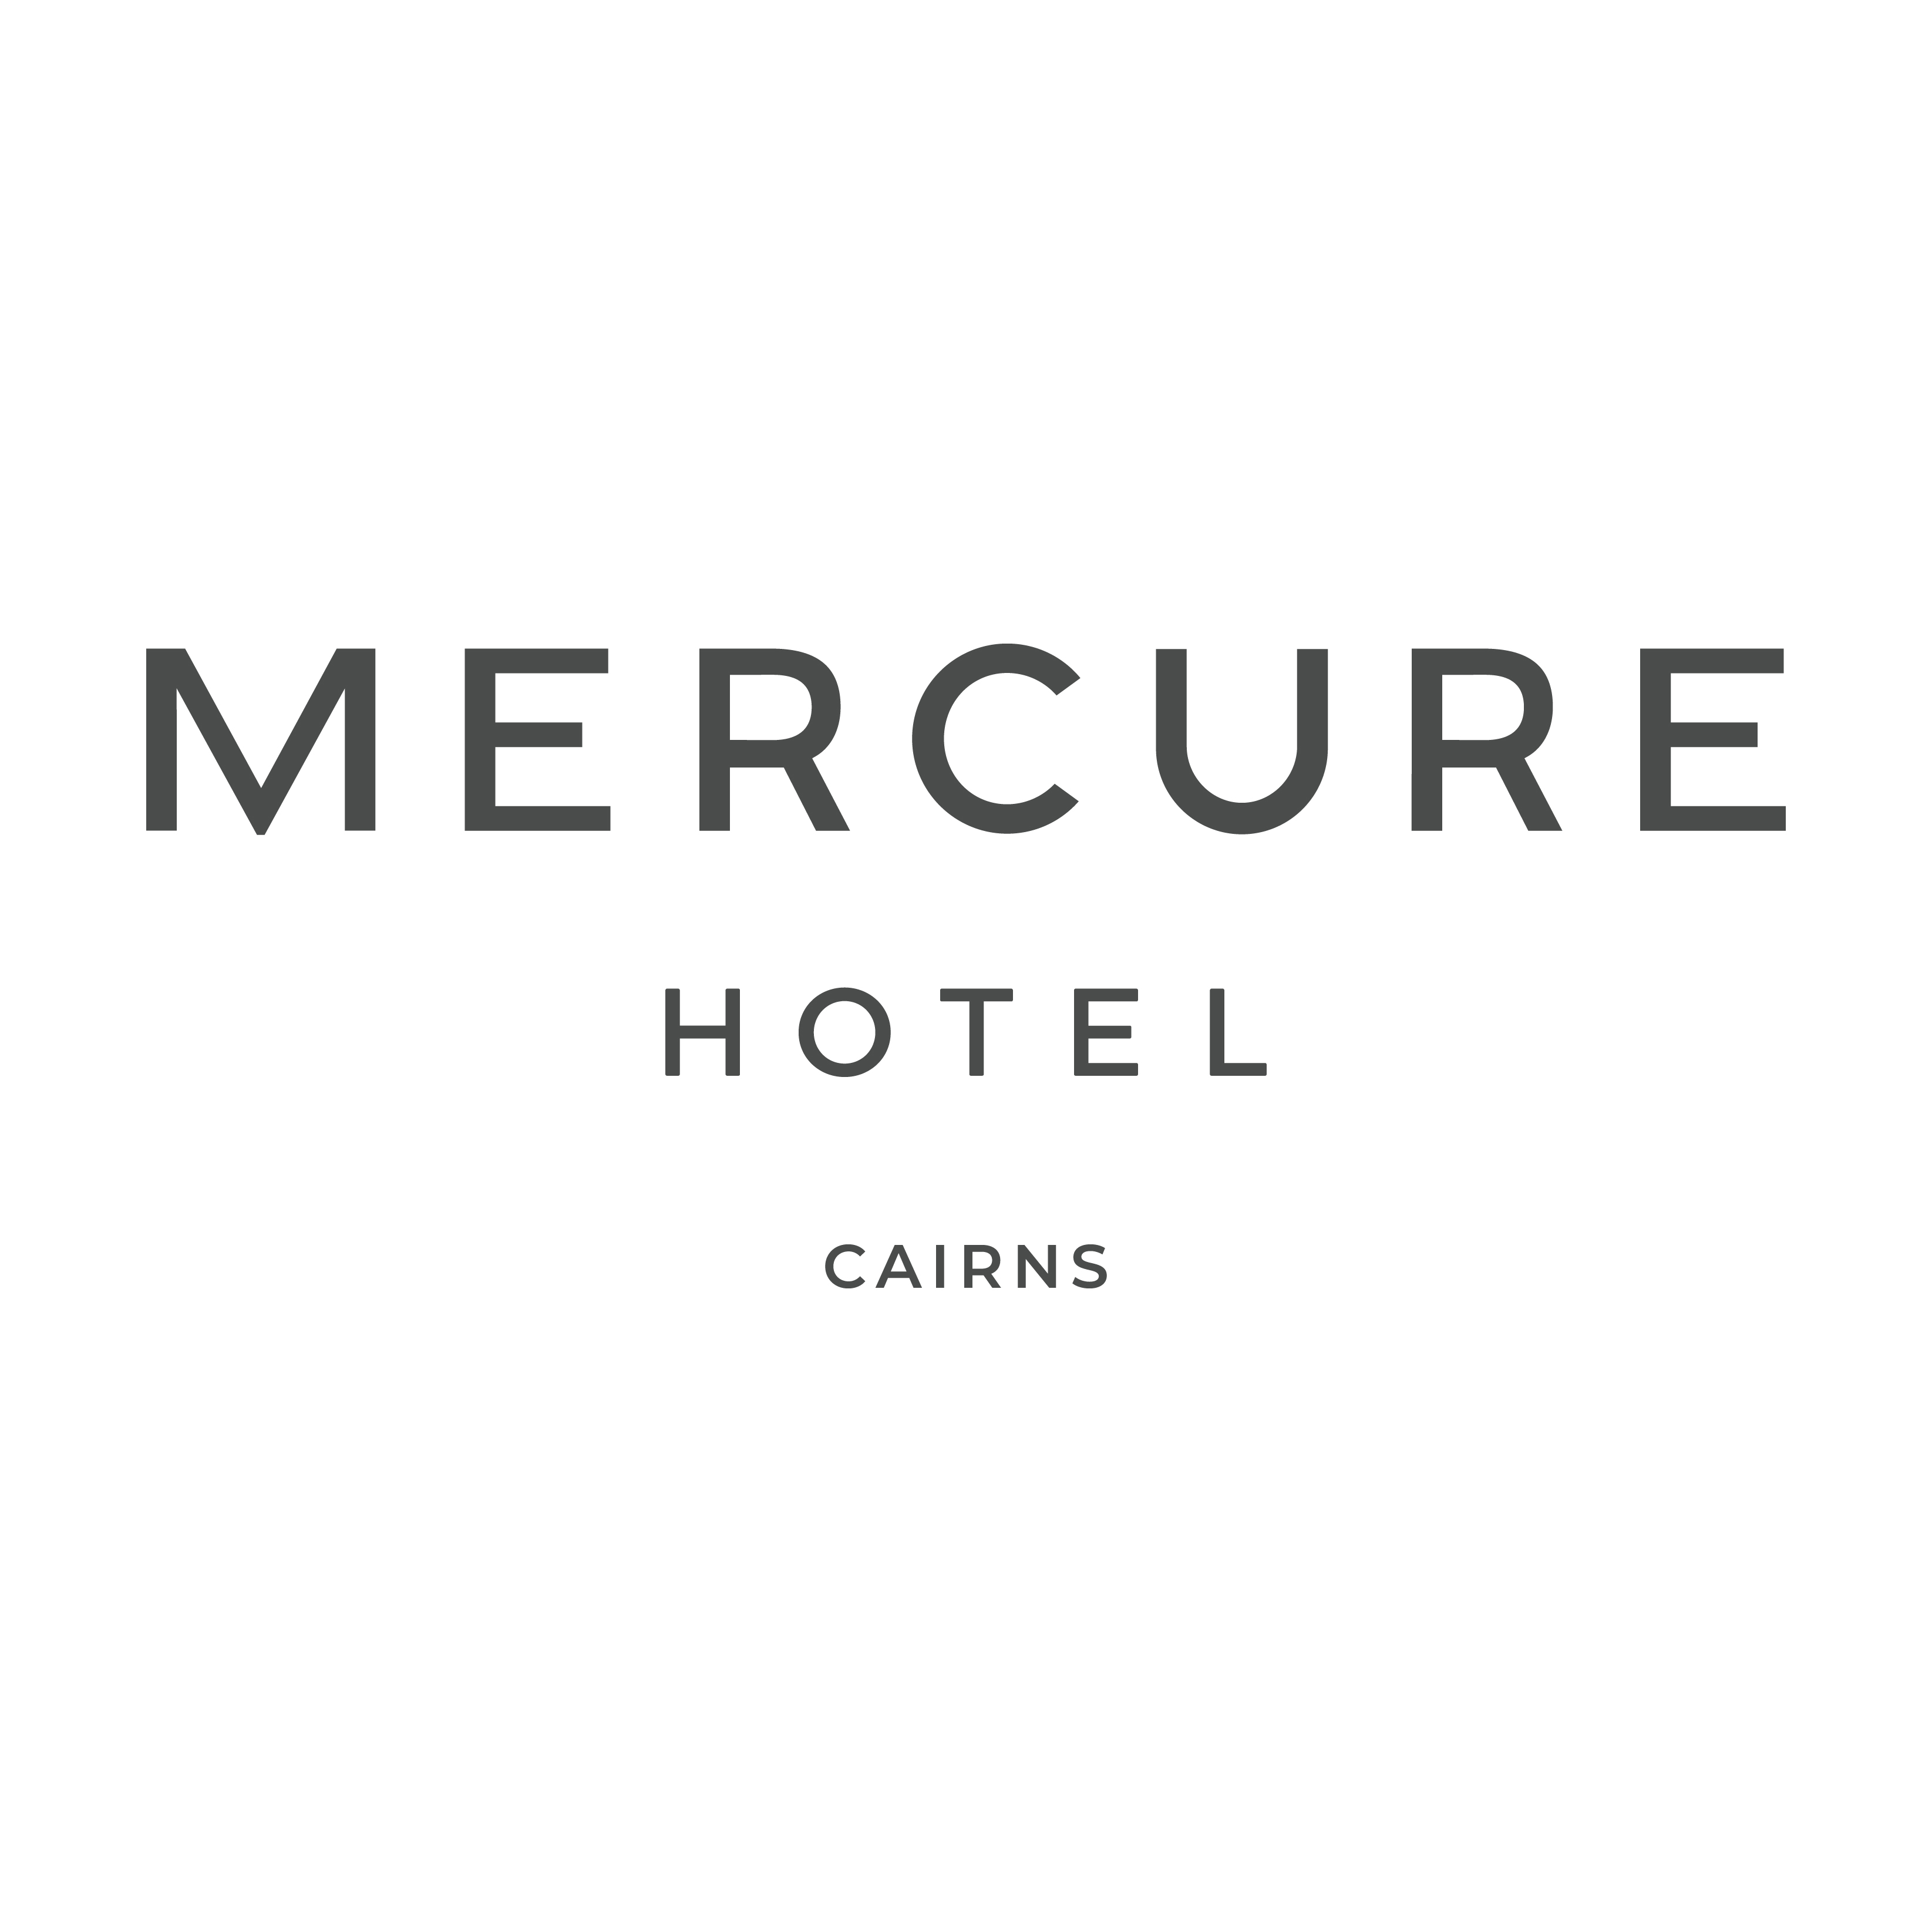 Mercure Cairns - Cairns, QLD 4870 - (07) 4051 5733 | ShowMeLocal.com